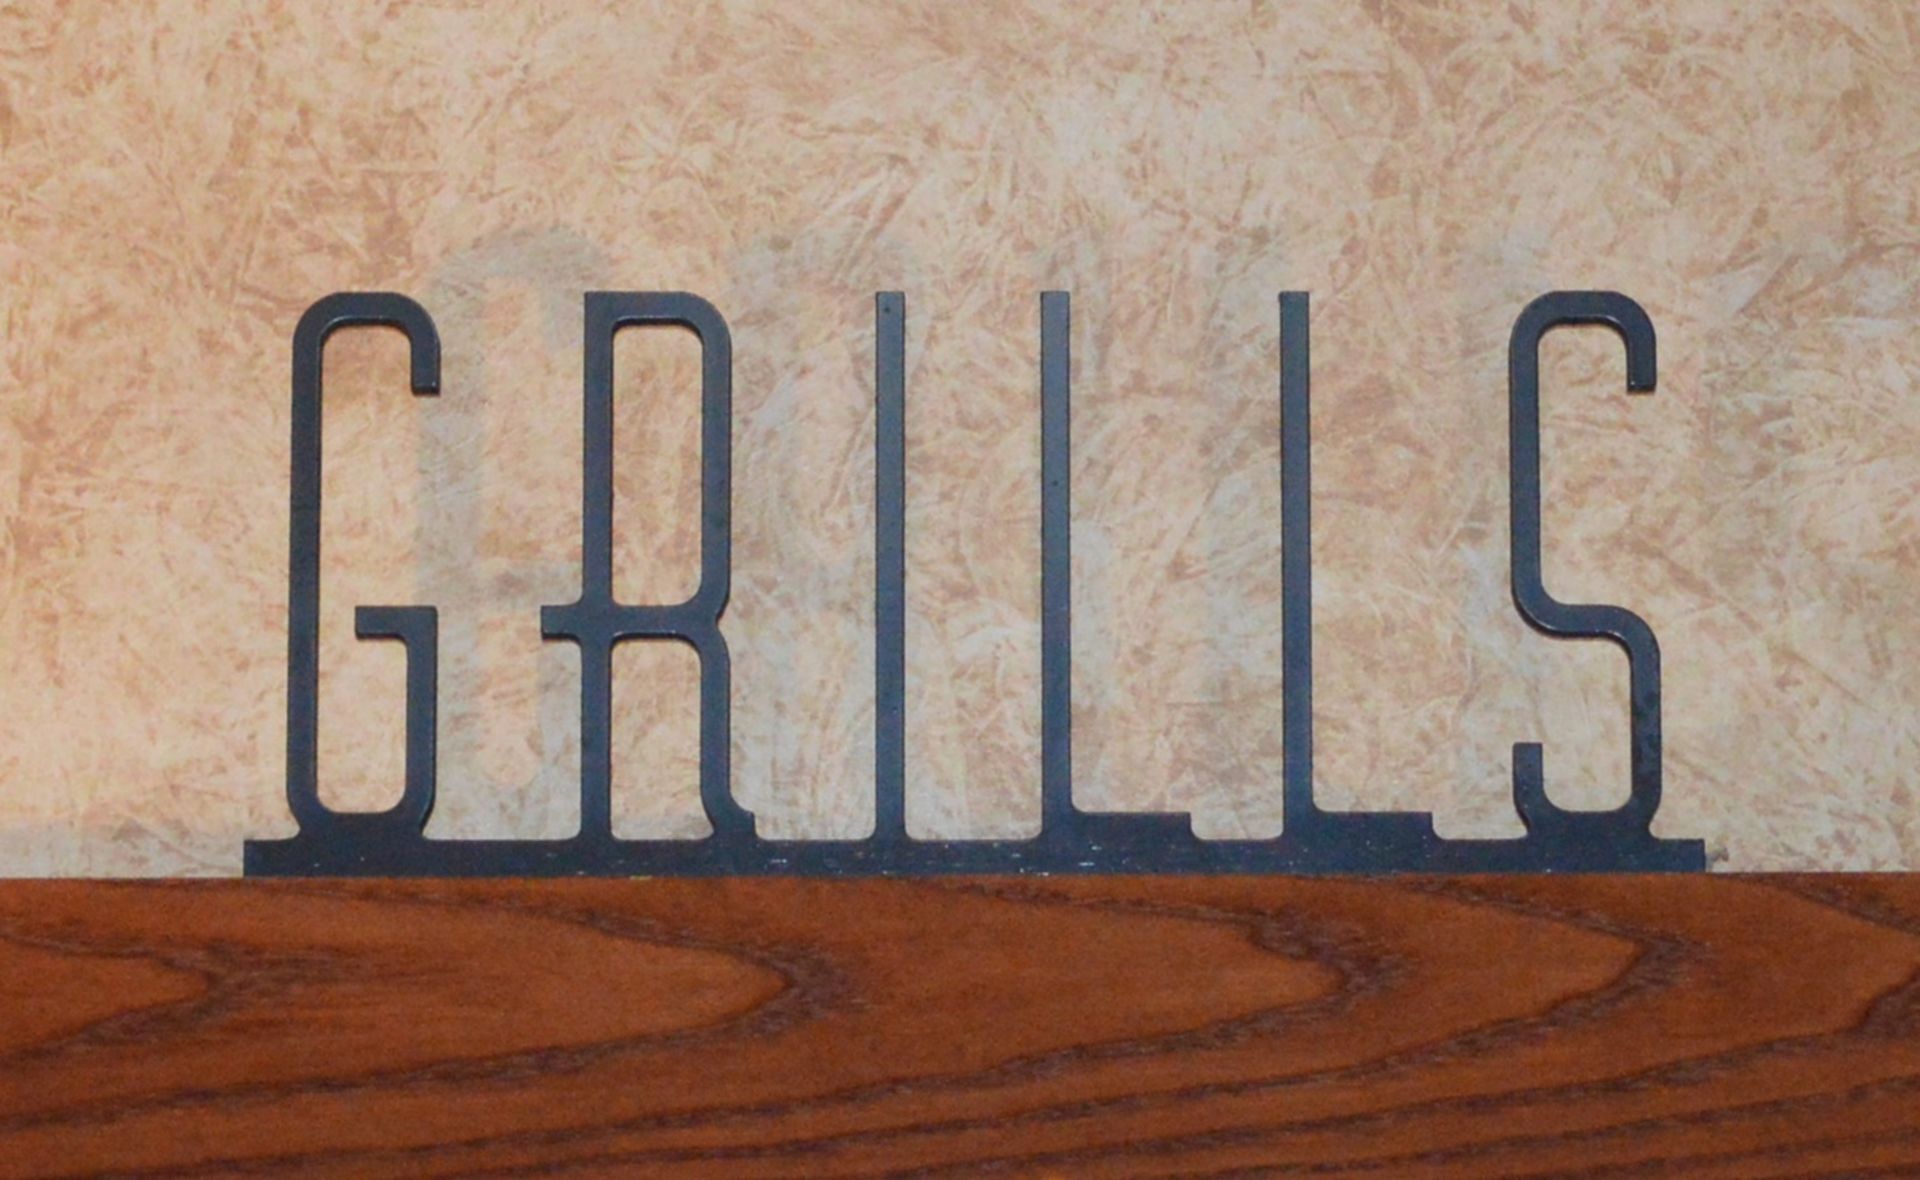 40 x Wooden Signs Suitable For Restaurants, Cafes, Bistros etc - Includes Grills, Amaretto, Penne,